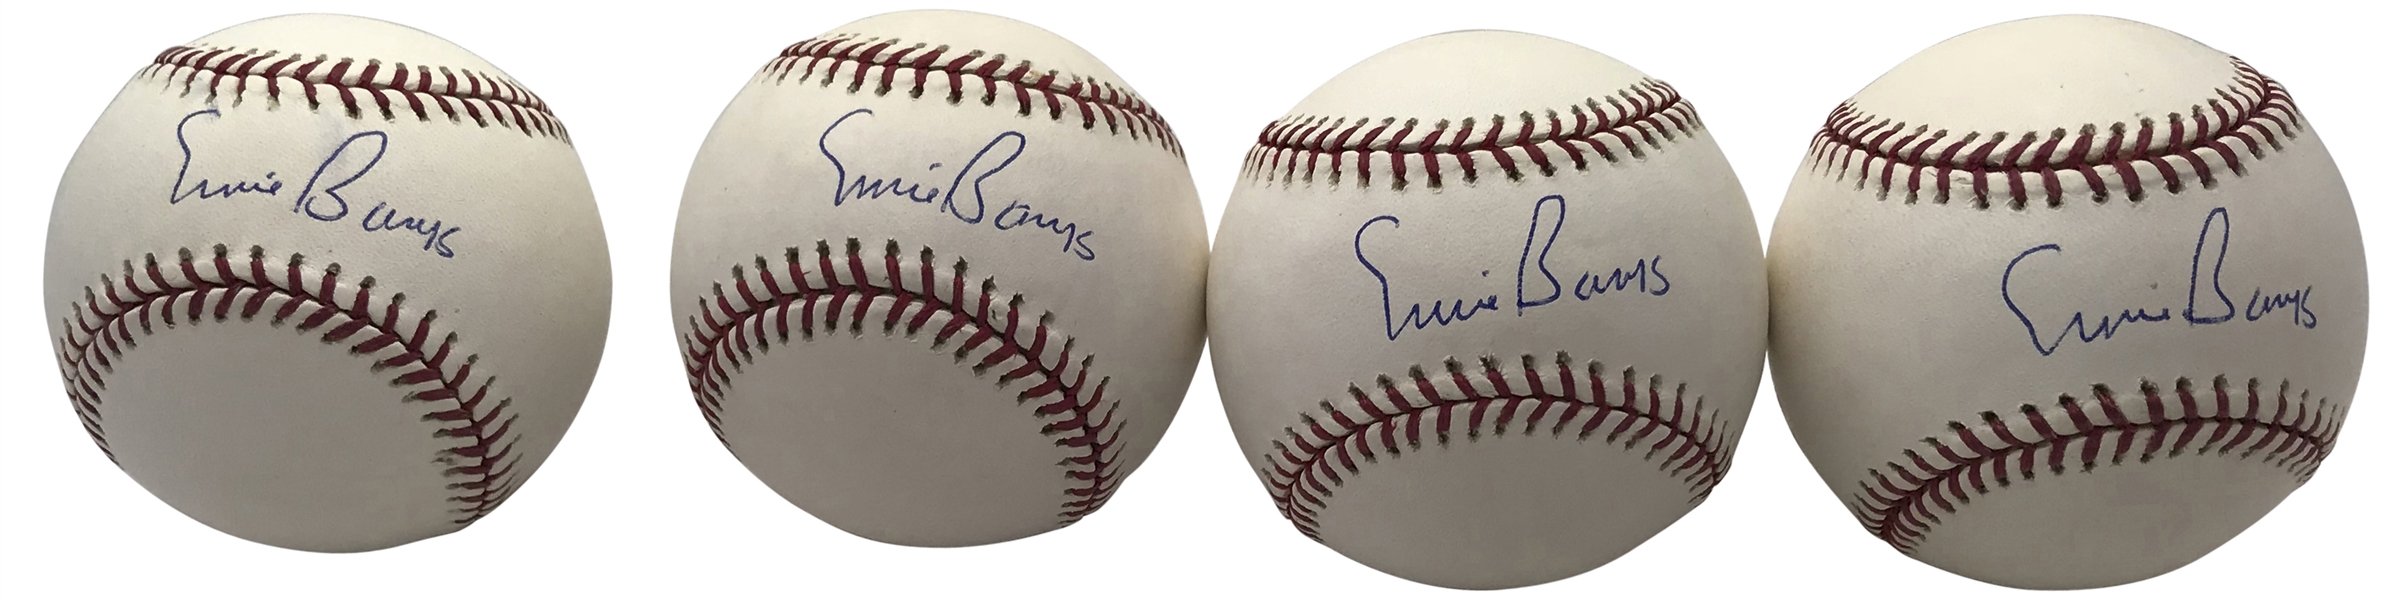 Lot of Four (4) Ernie Banks Signed OML Baseballs (Tri-Star & Beckett/BAS Guaranteed)